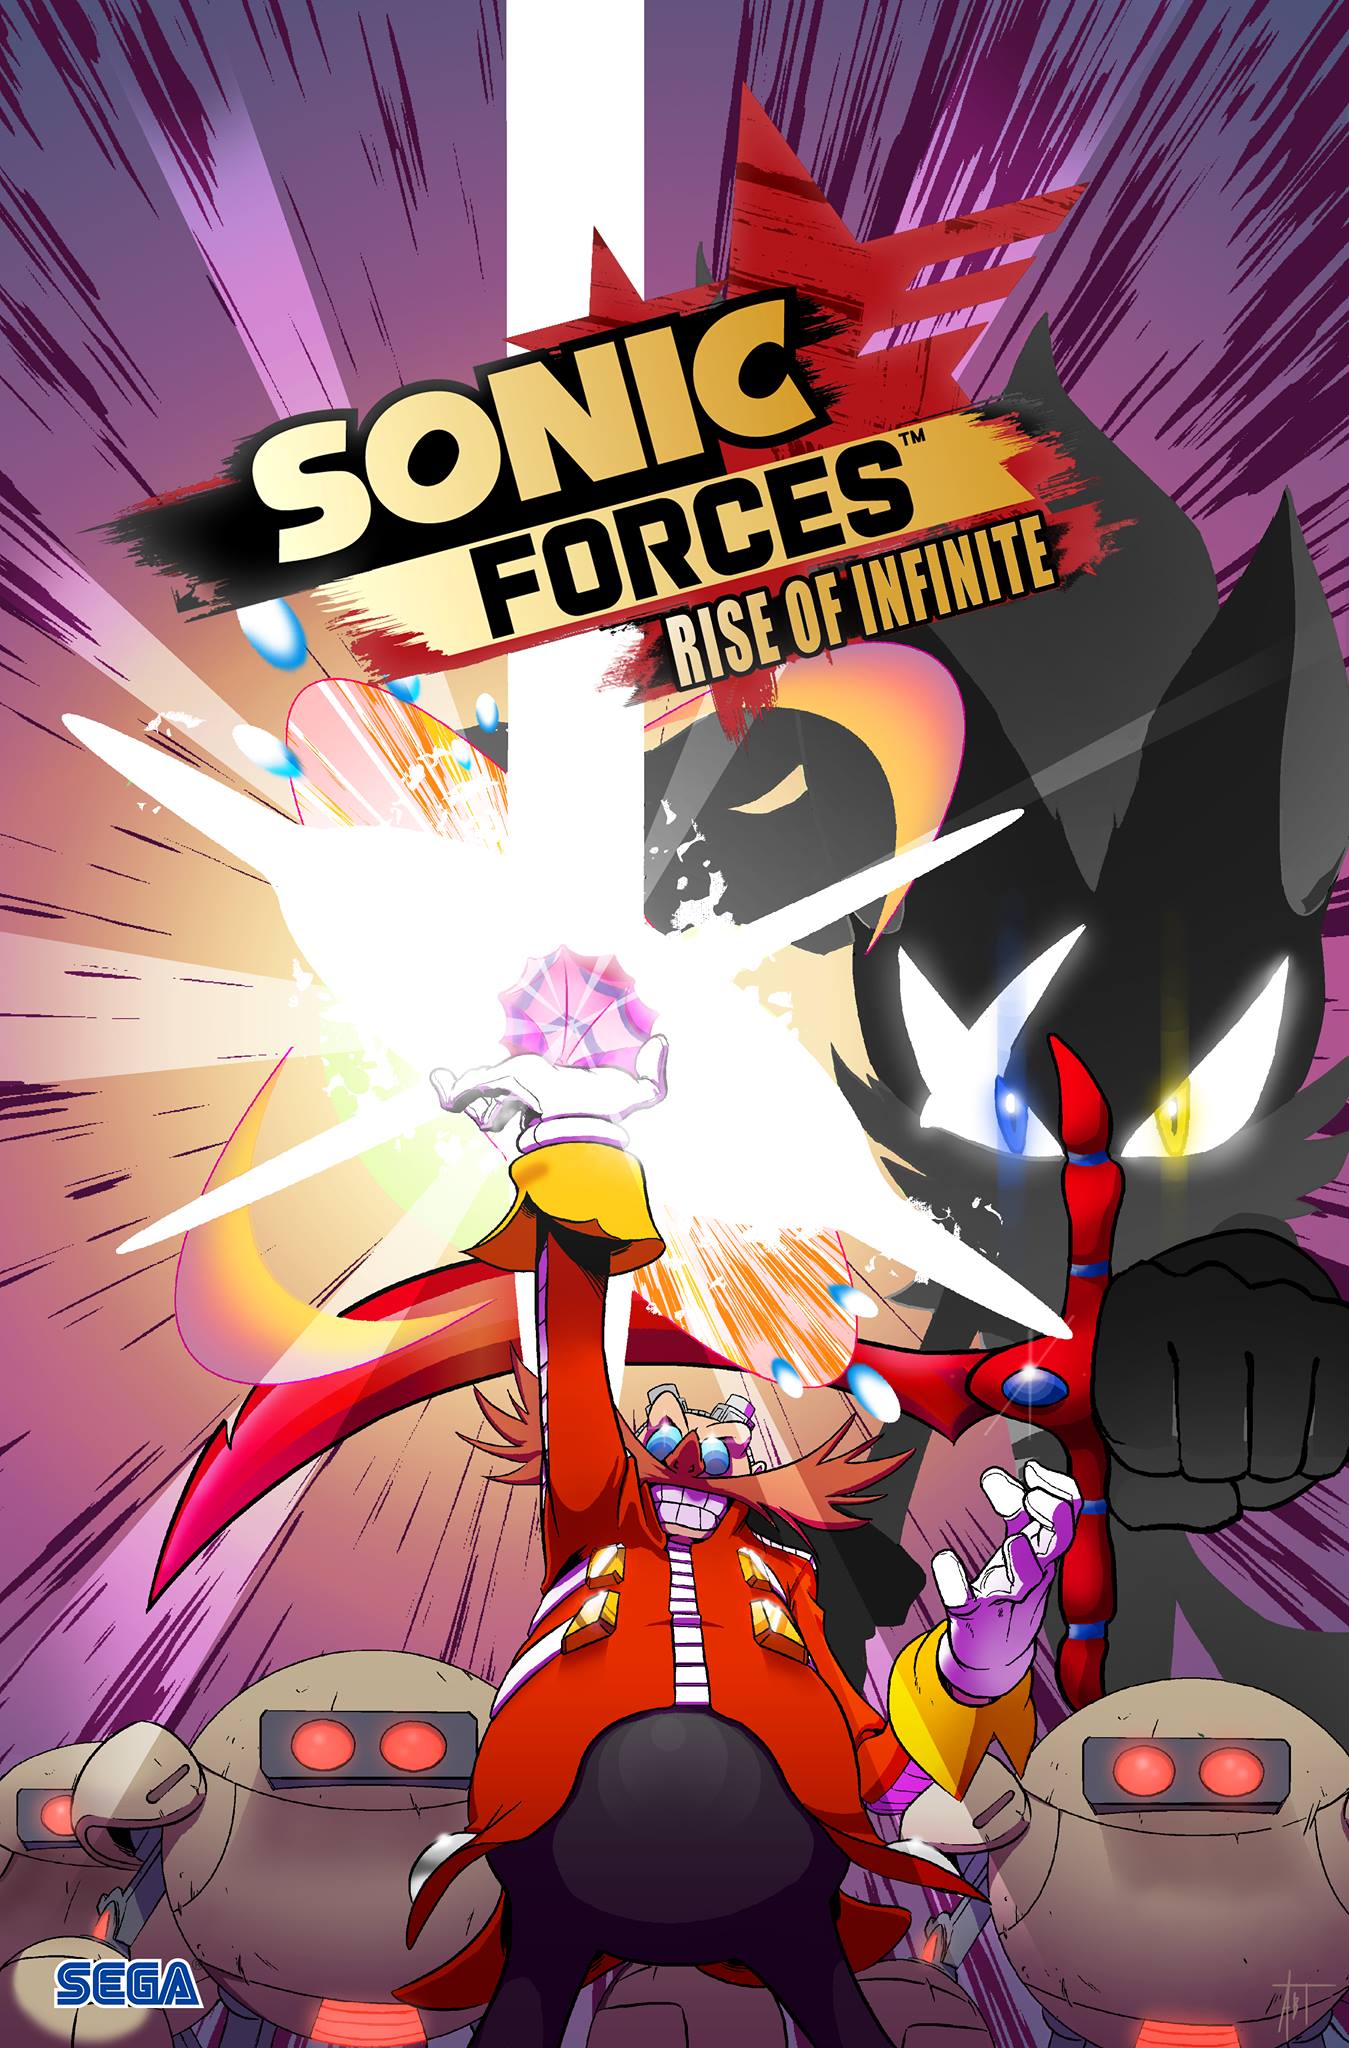 Sonic Forces digital comic showcases the “Rise of Infinite” » SEGAbits - #1  Source for SEGA News